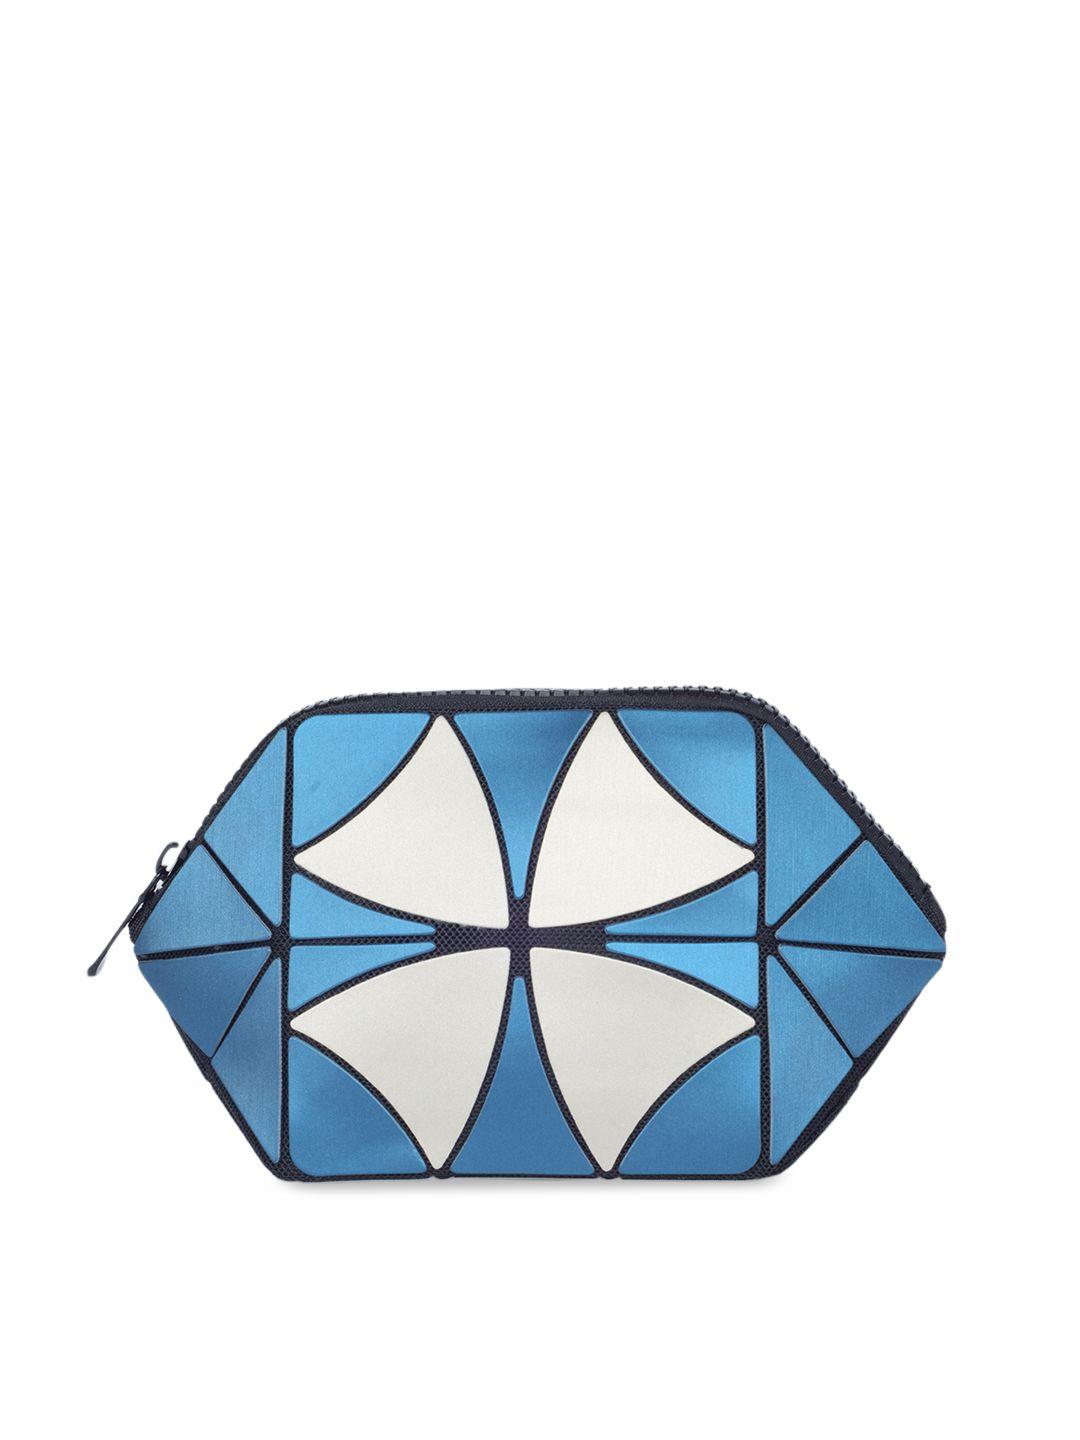 baomi blue & white textured  geometric cosmetic pouch range clutch